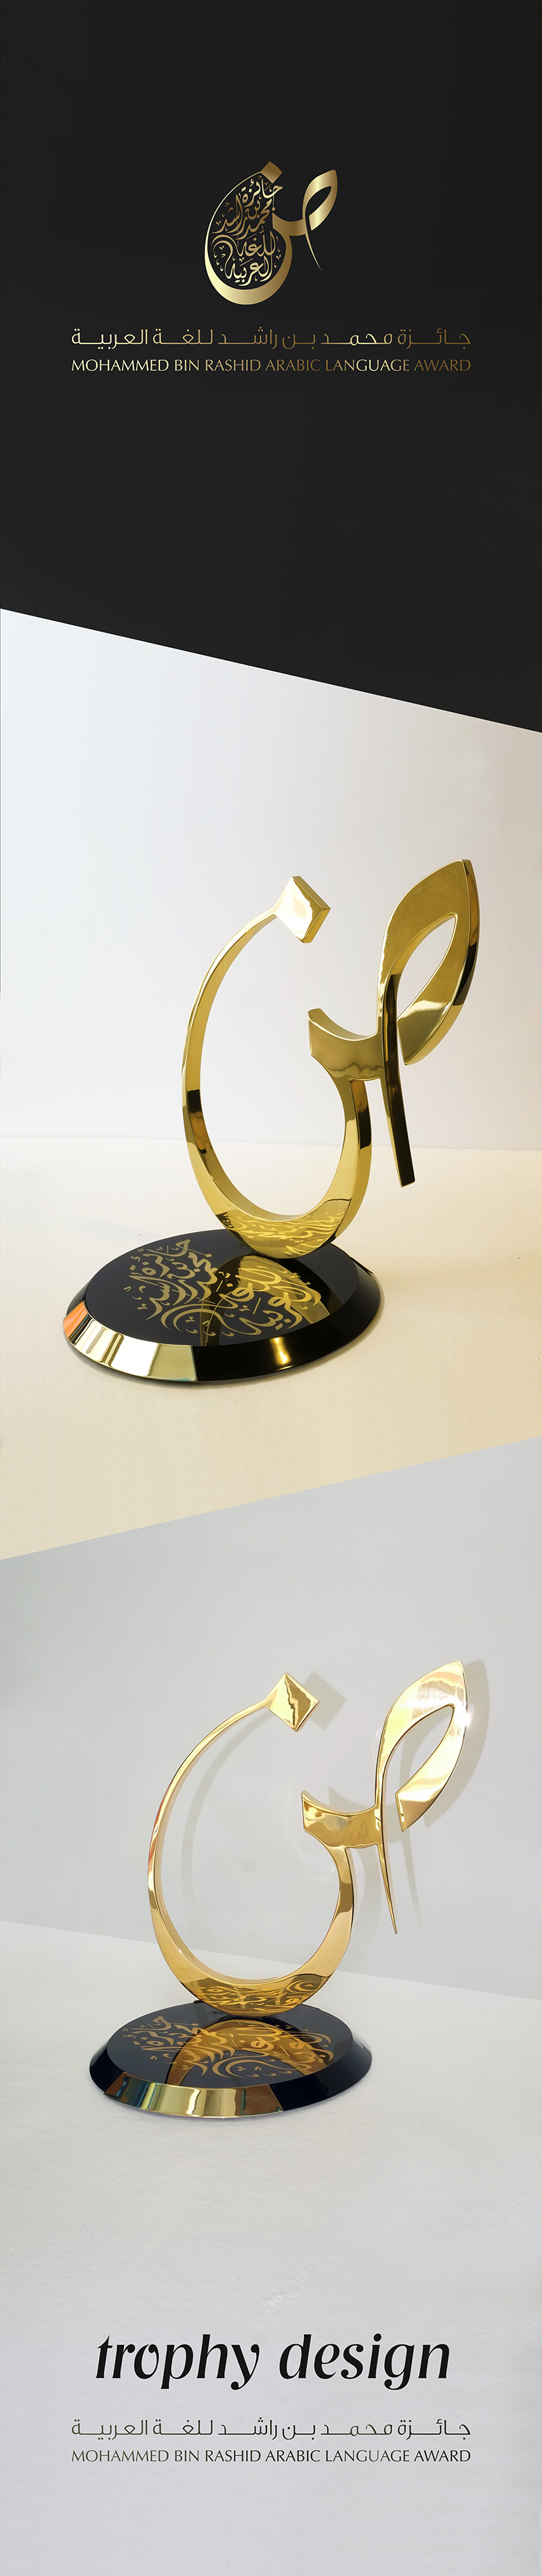 3D trophy Arab Awards award piece decor sculpture Event